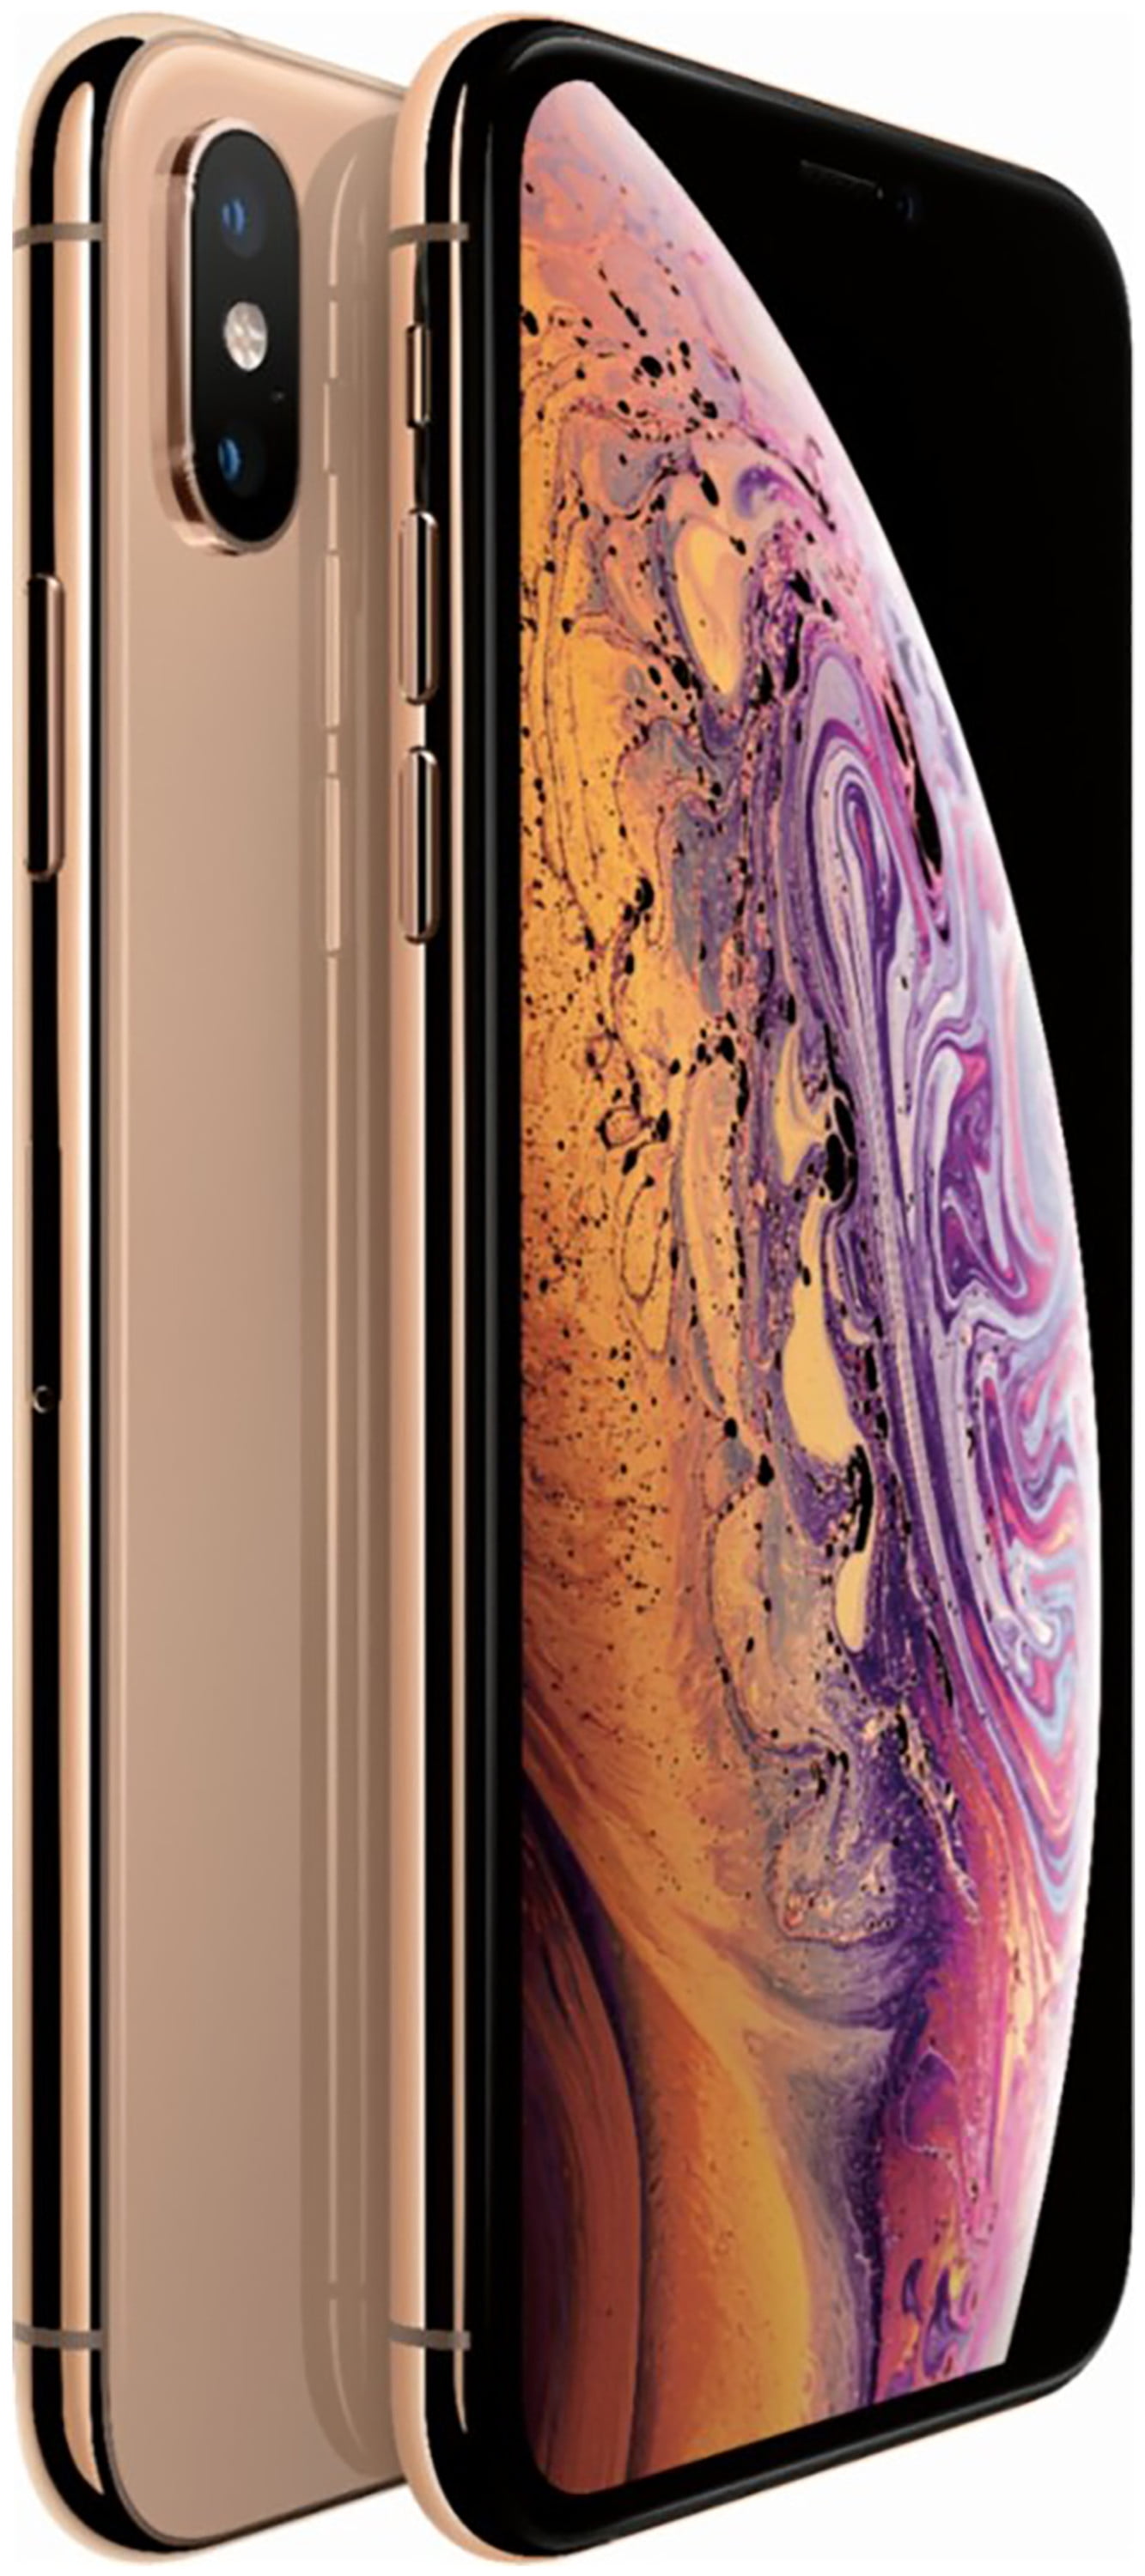 Apple iPhone XS 64GB Unlocked GSM/CDMA 4G LTE Phone with Dual 12MP Camera -  Gold (Refurbished: Fair)